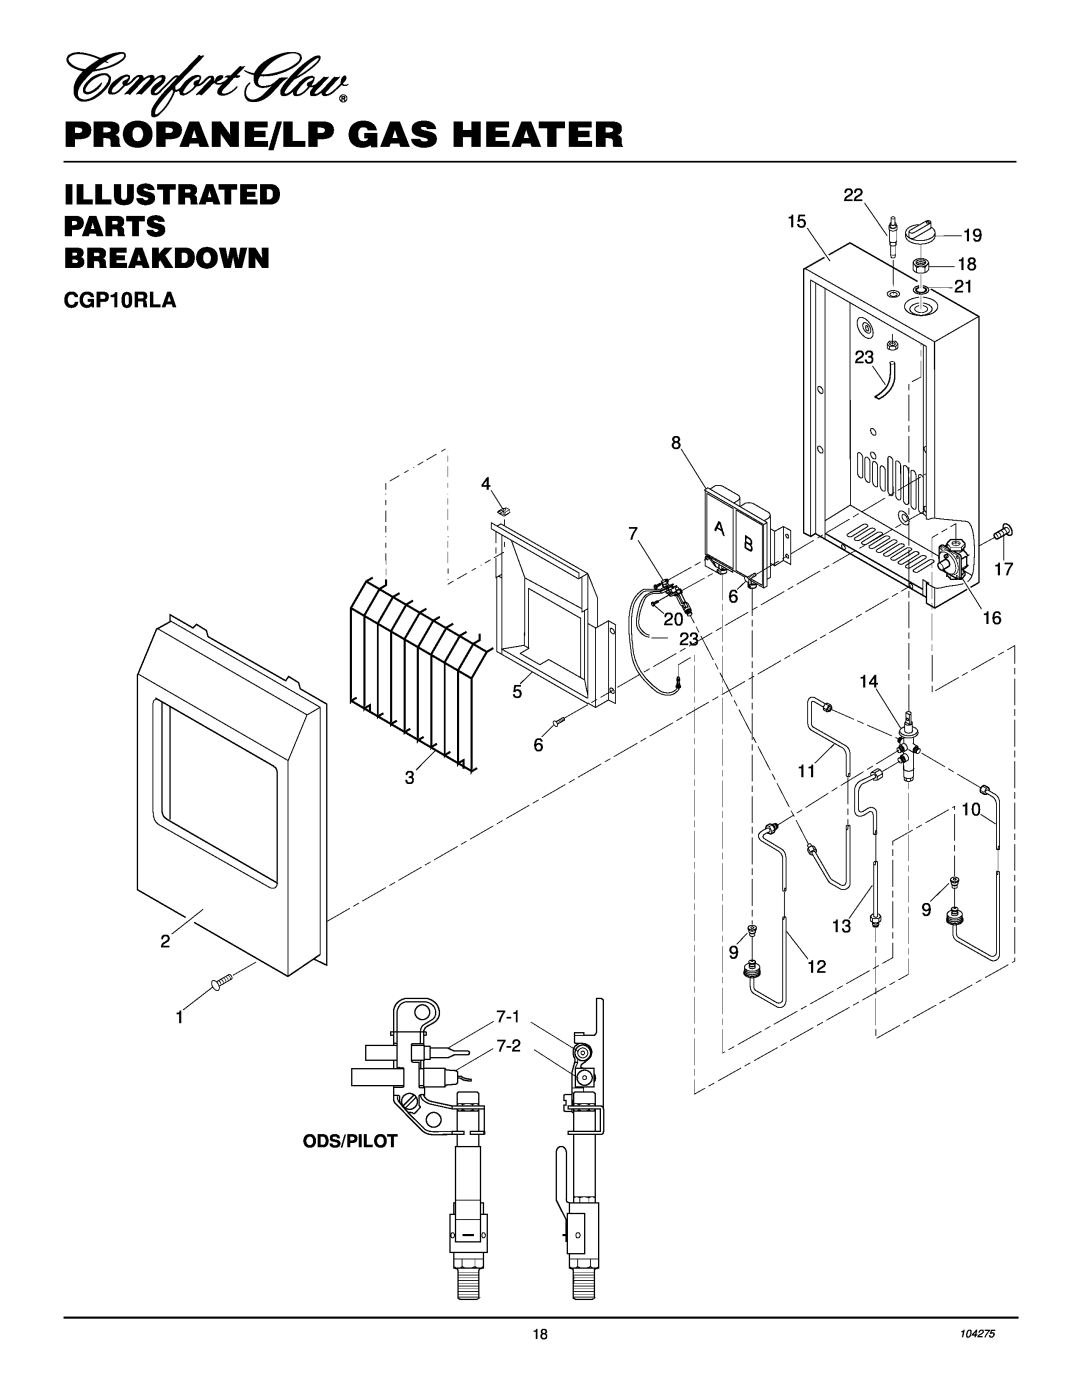 Desa CGP10RLA installation manual Illustrated Parts Breakdown, Propane/Lp Gas Heater 